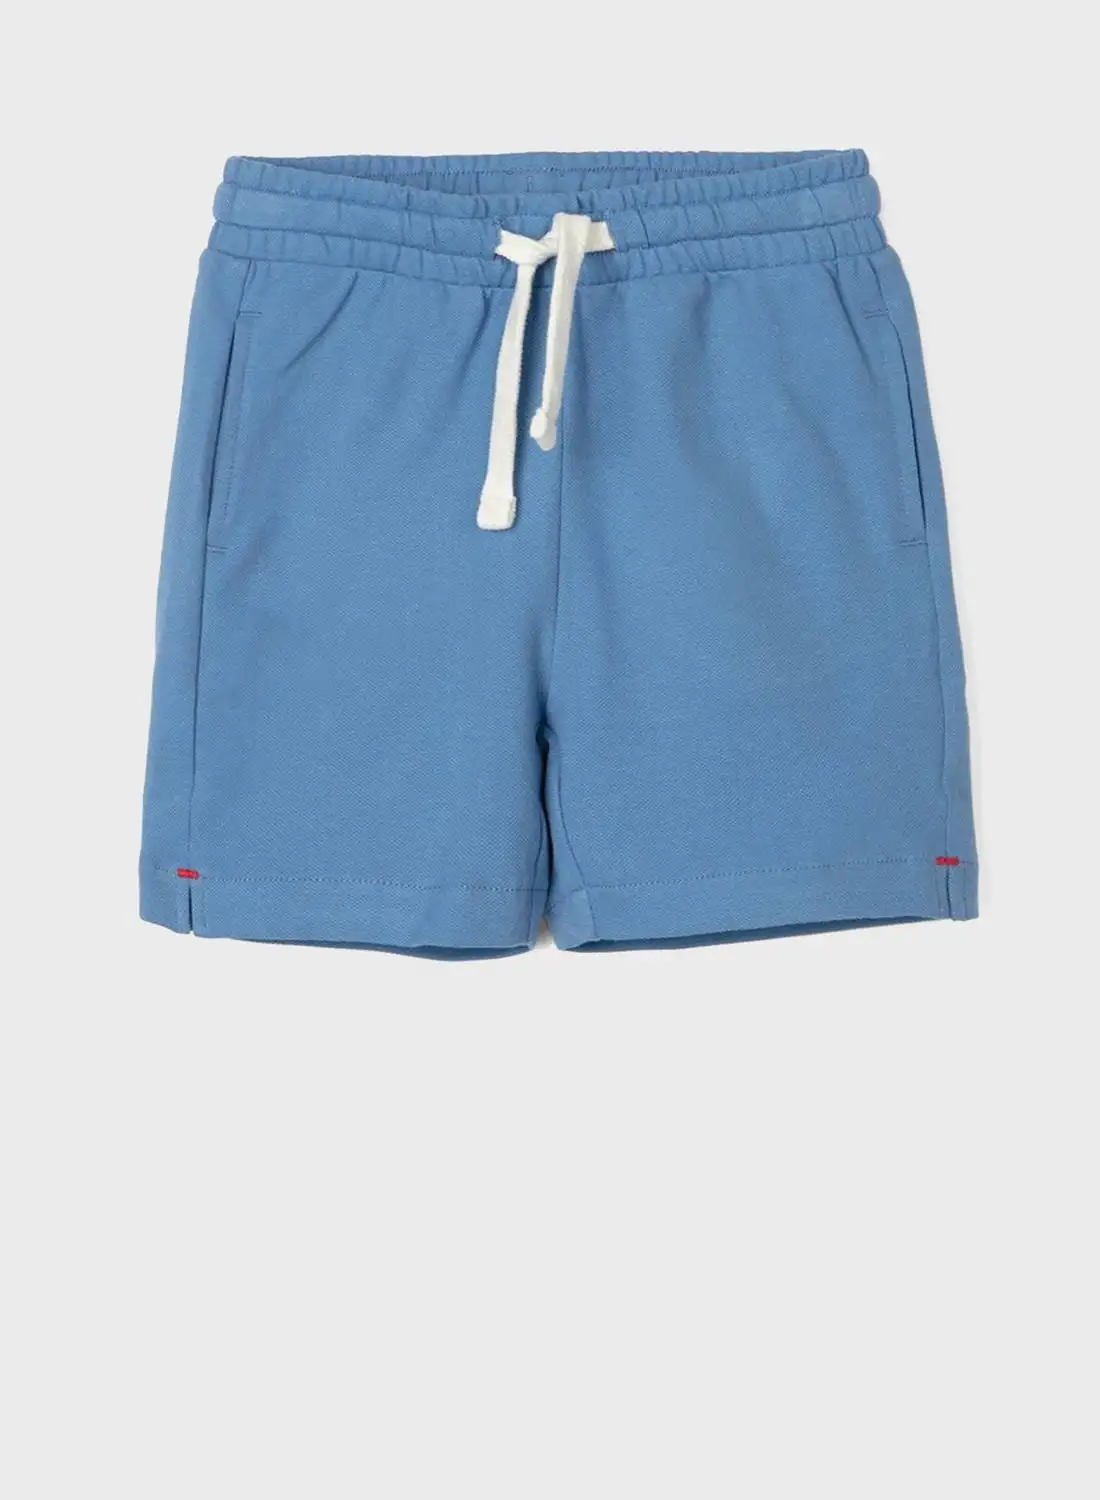 Zippy Infant Kids Essential Shorts